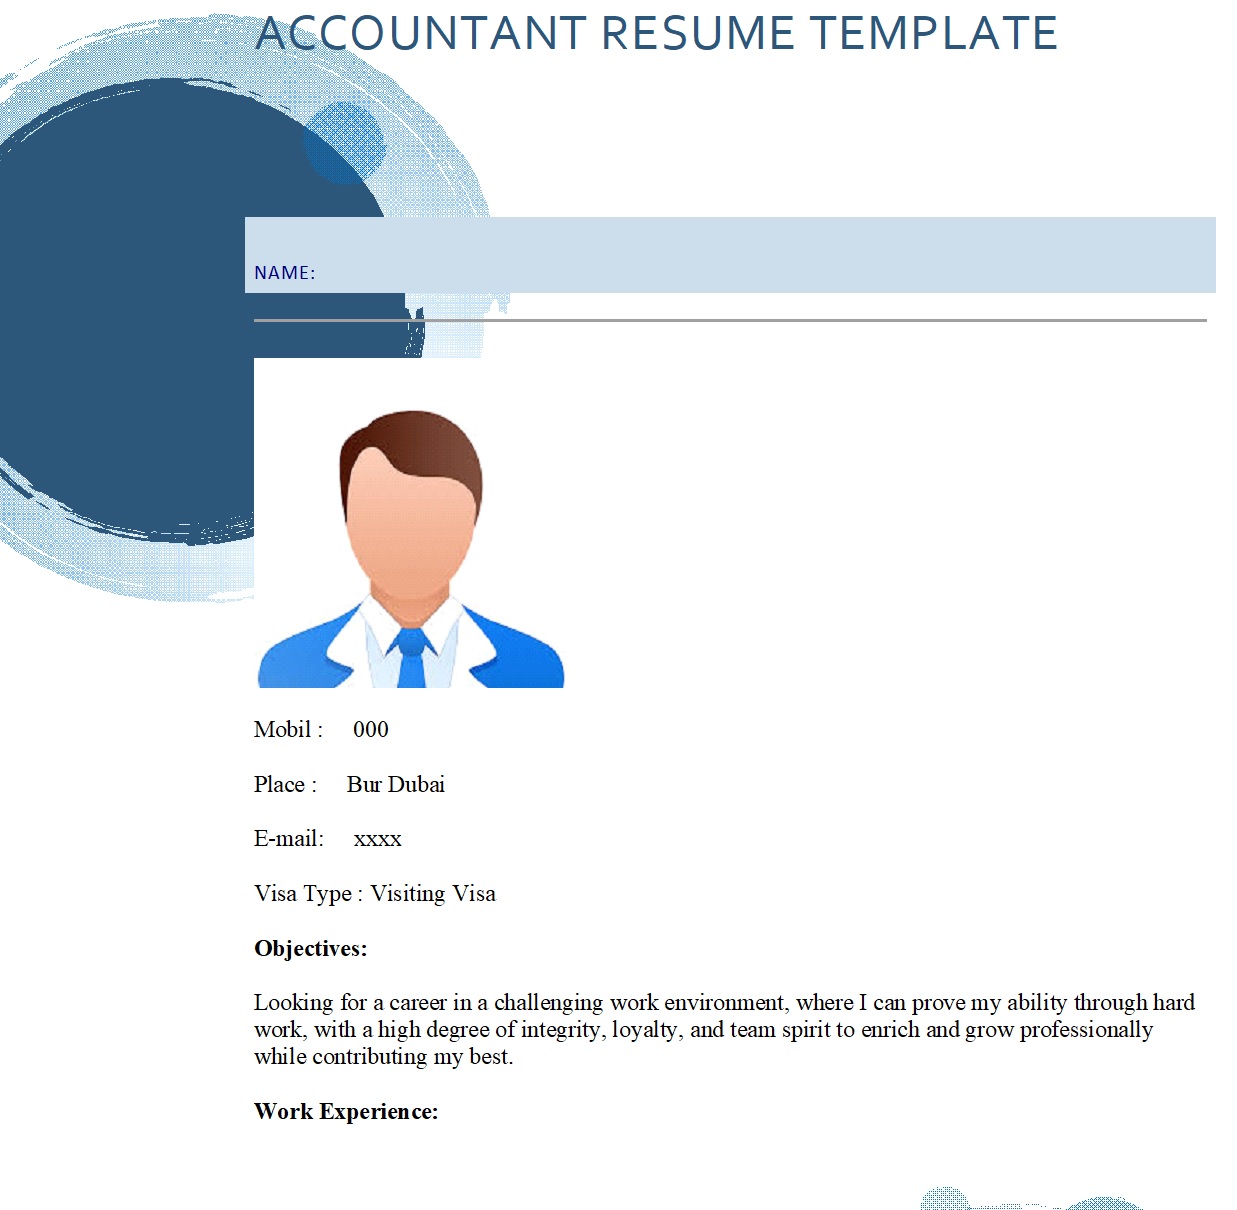 free accountant resume template